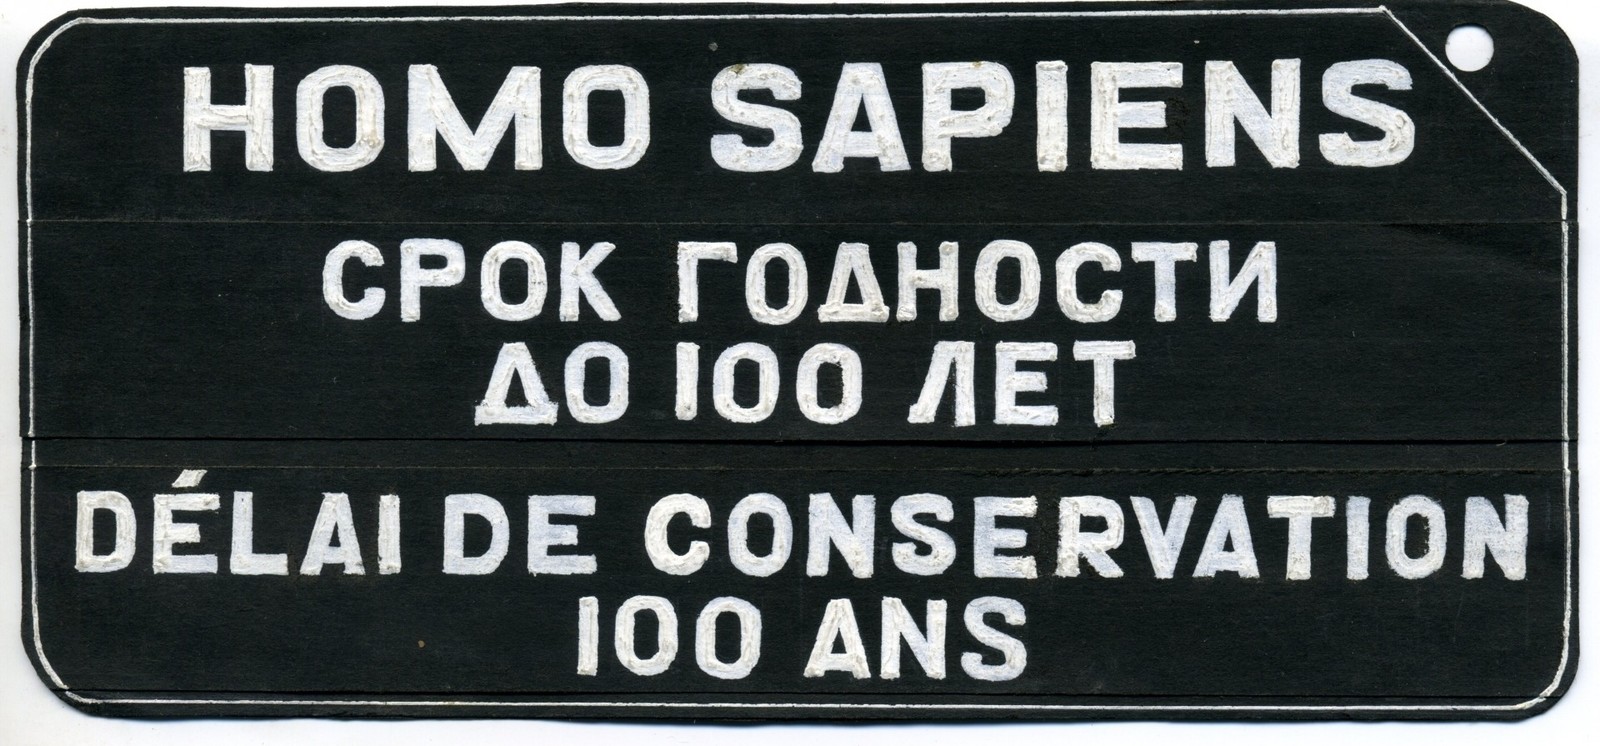 Rimma and Valeriy Gerlovin. Documentaion for "Зоо &ndash; homo sapiens" action, 1977 Garage Archive Collection (L. P. Talochkin collection)&nbsp;